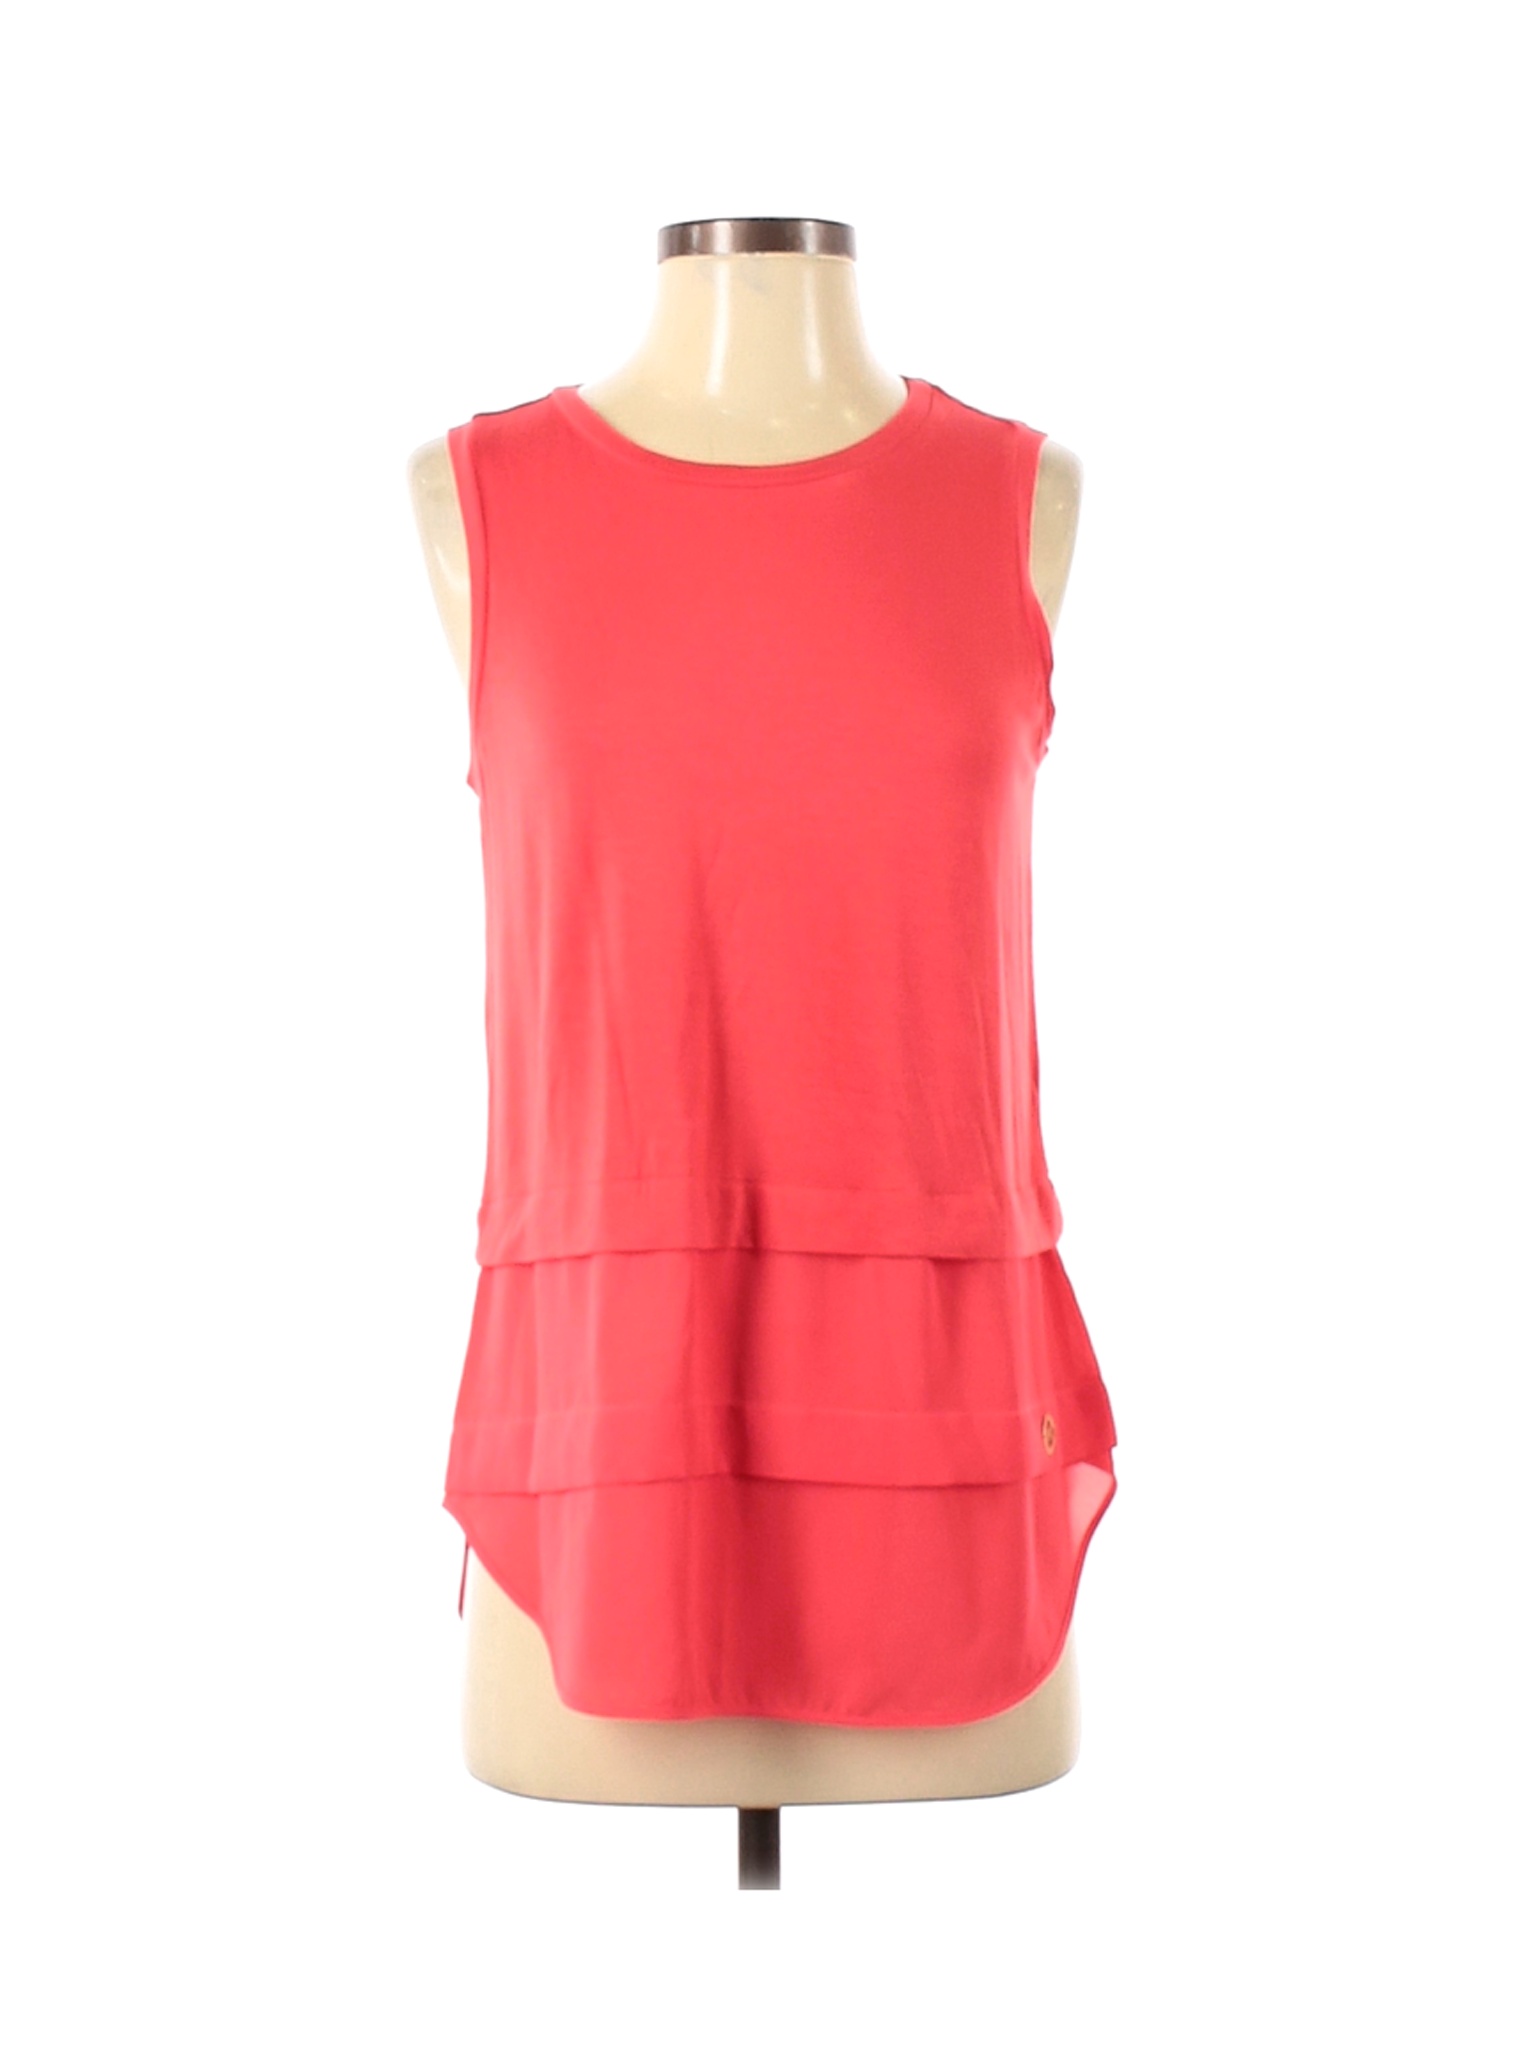 MICHAEL Michael Kors Women Pink Sleeveless Top S | eBay